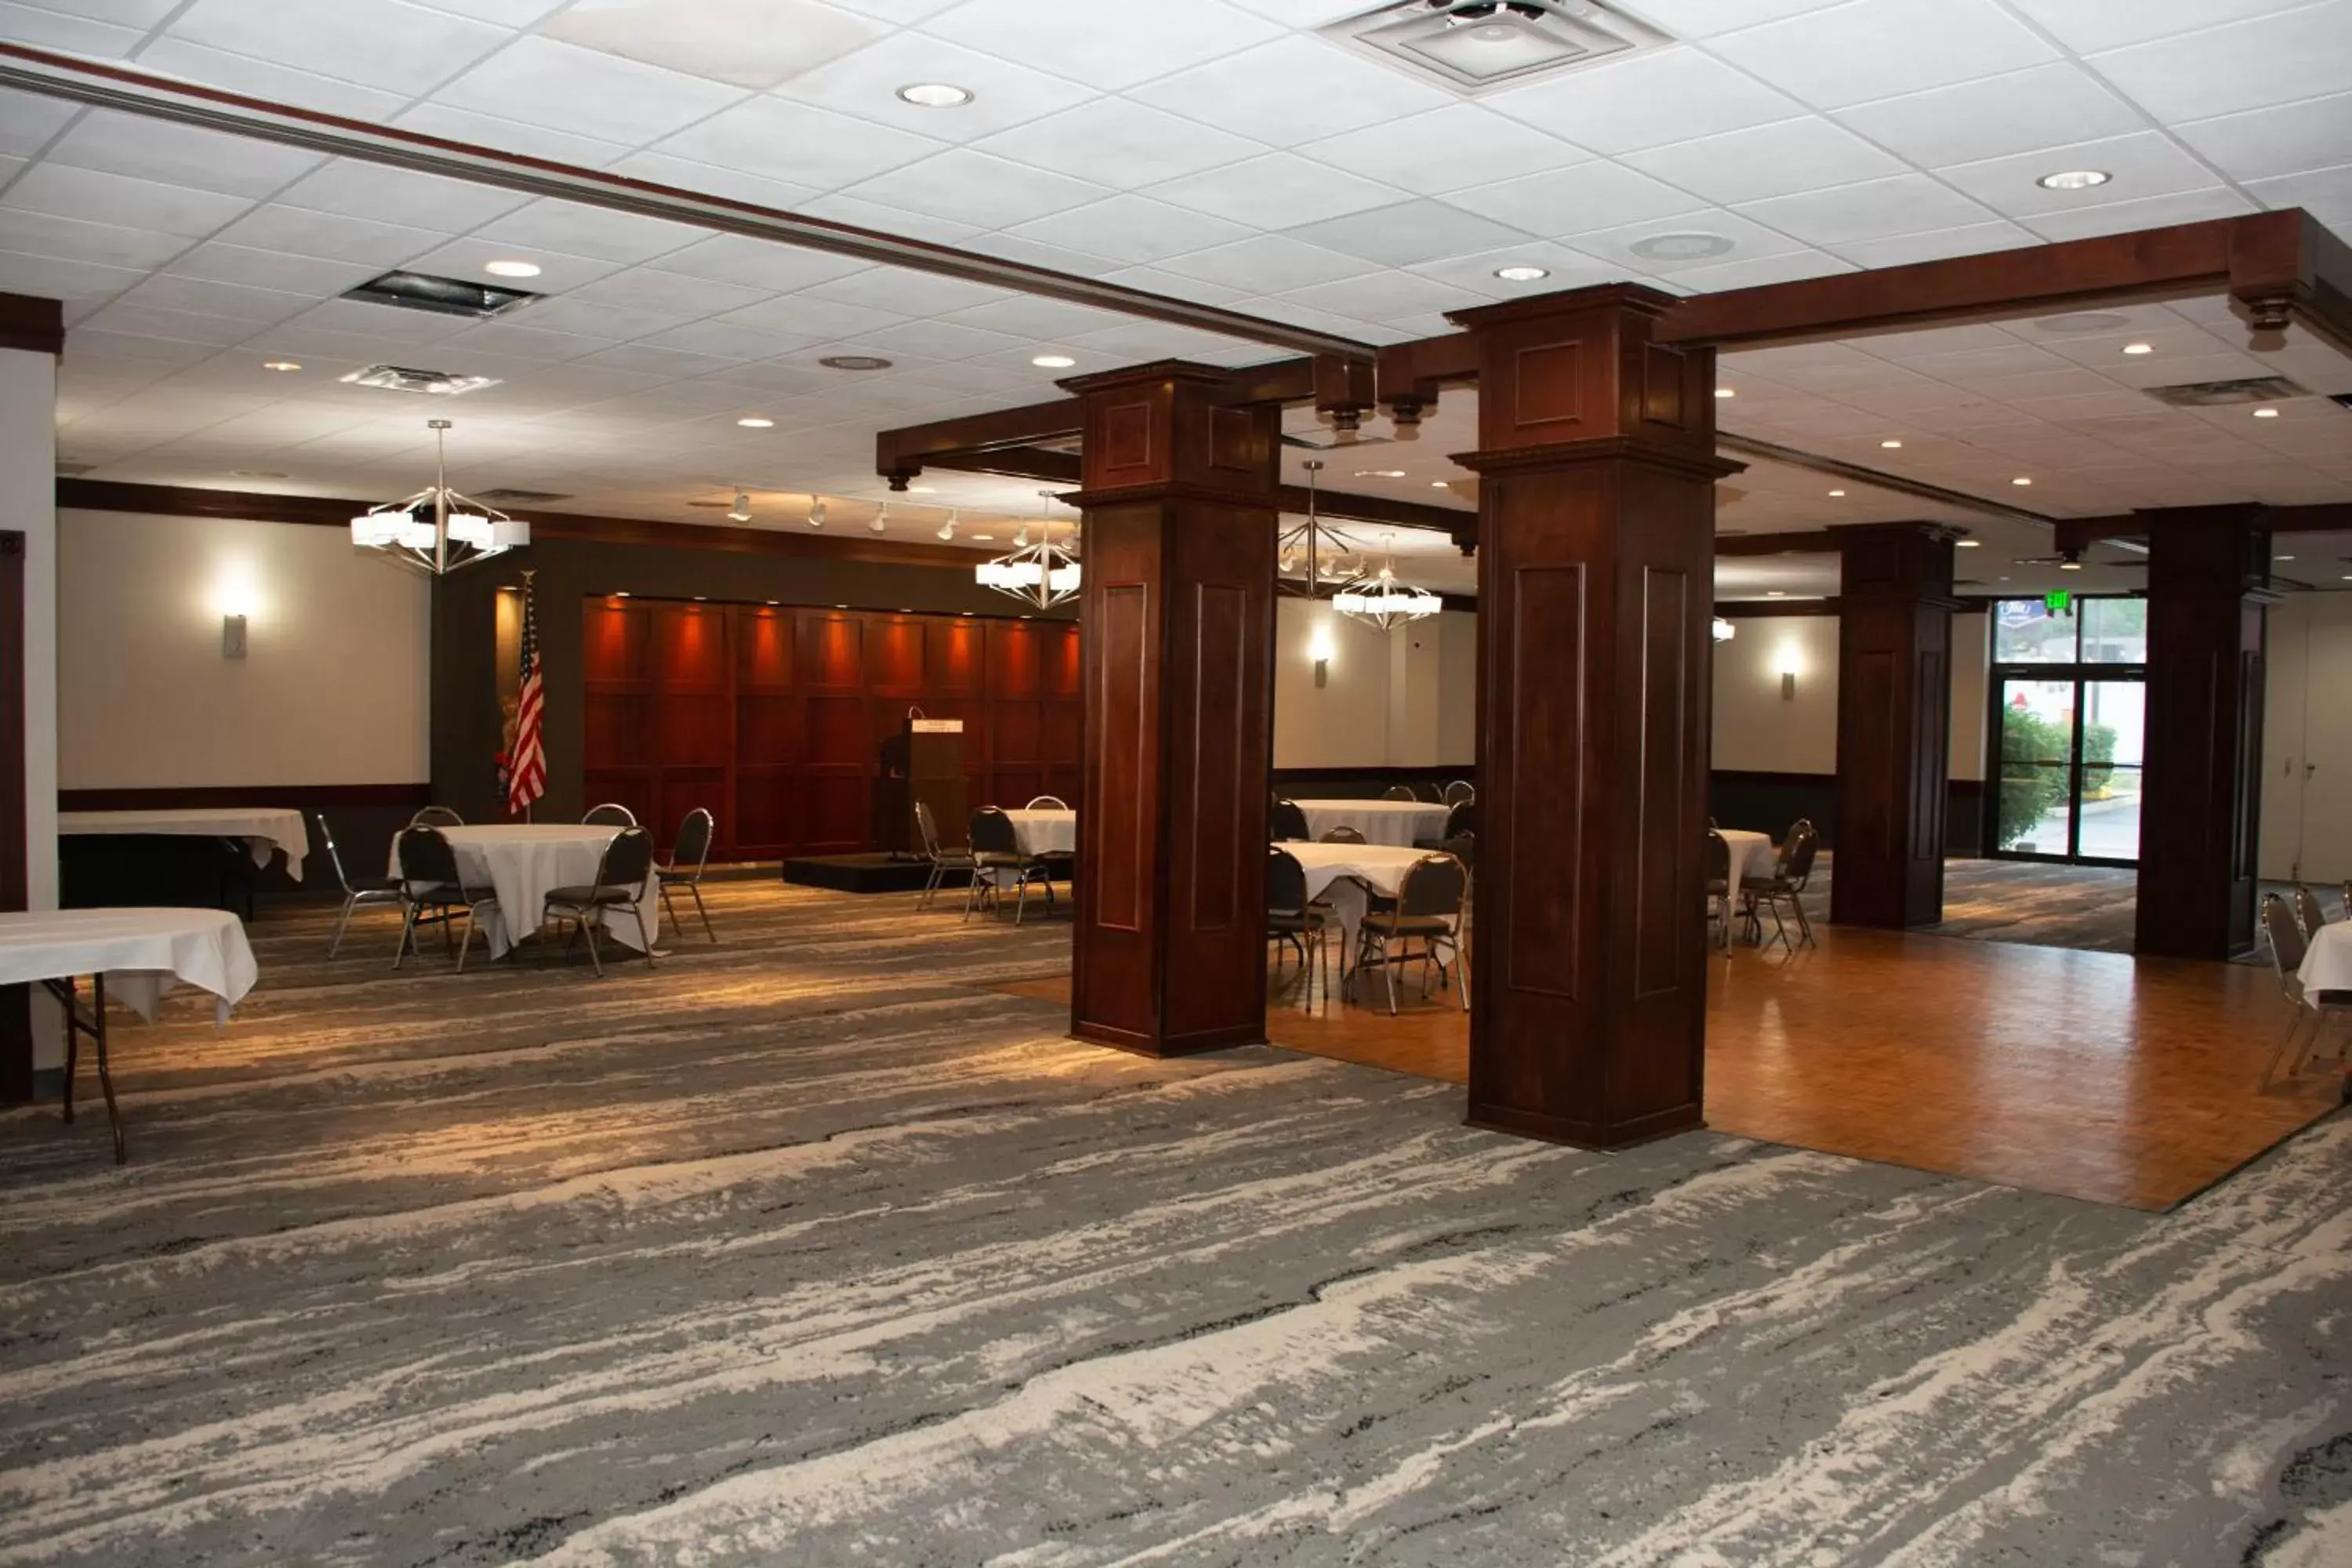 Banquet/Function facilities, Banquet Facilities in Best Western Plus Clarks Summit Scranton Hotel